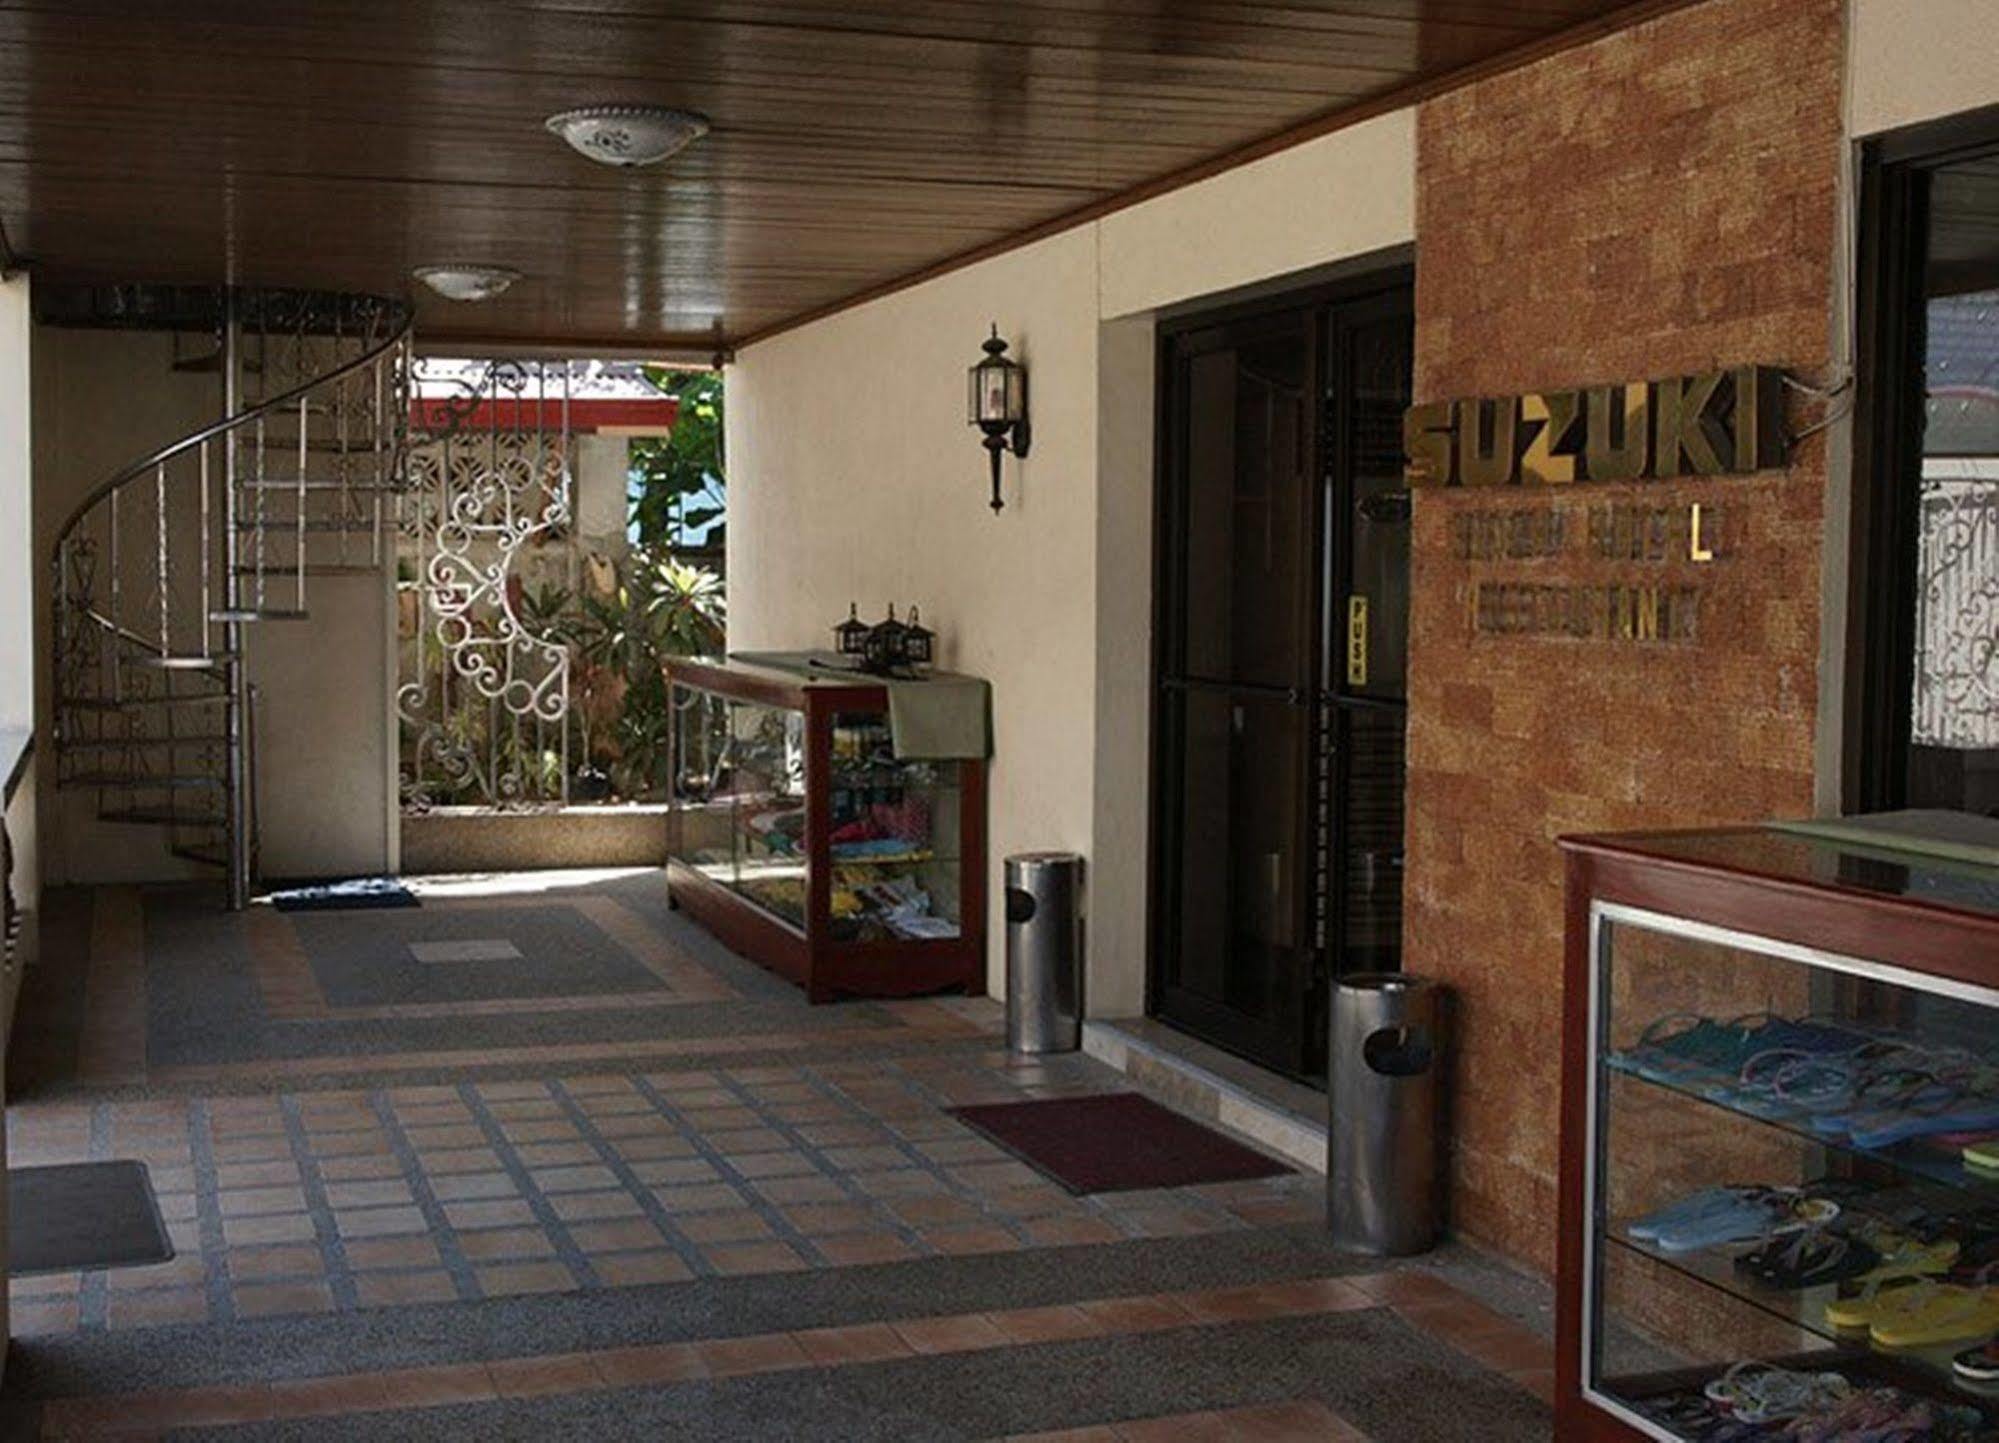 Suzuki Beach Hotel Olongapo Exterior photo